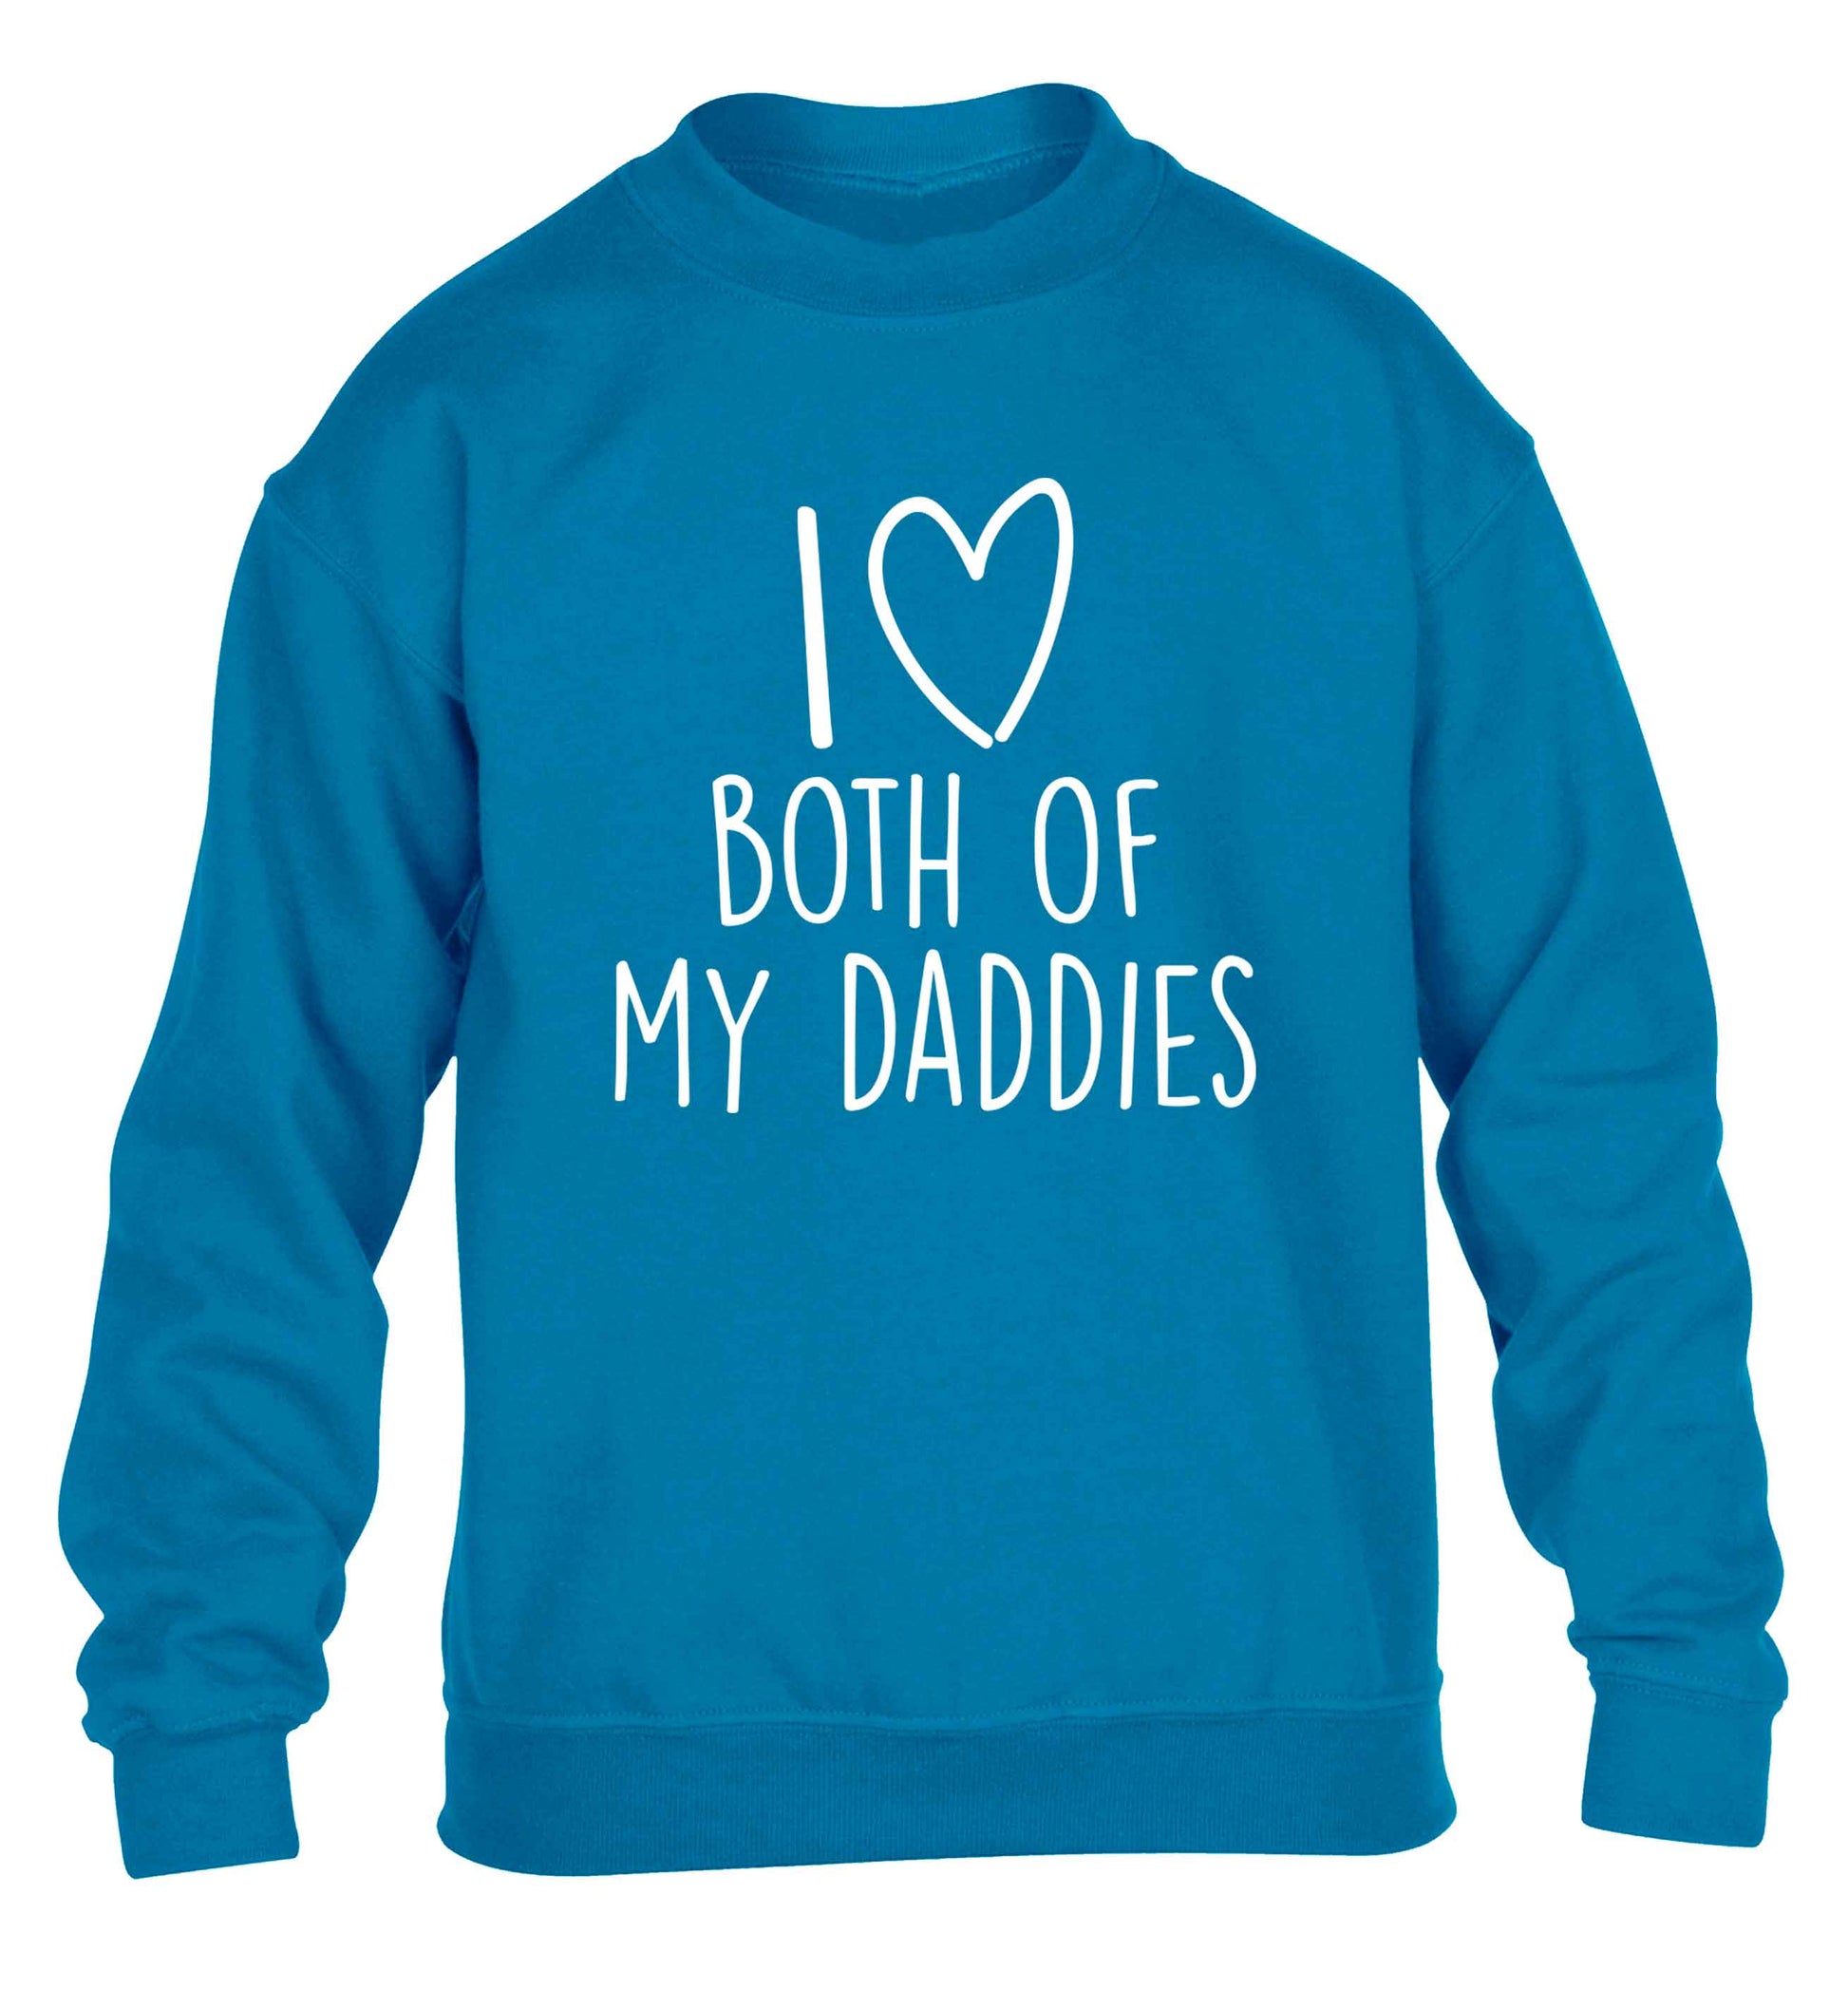 I love both of my daddies children's blue sweater 12-13 Years